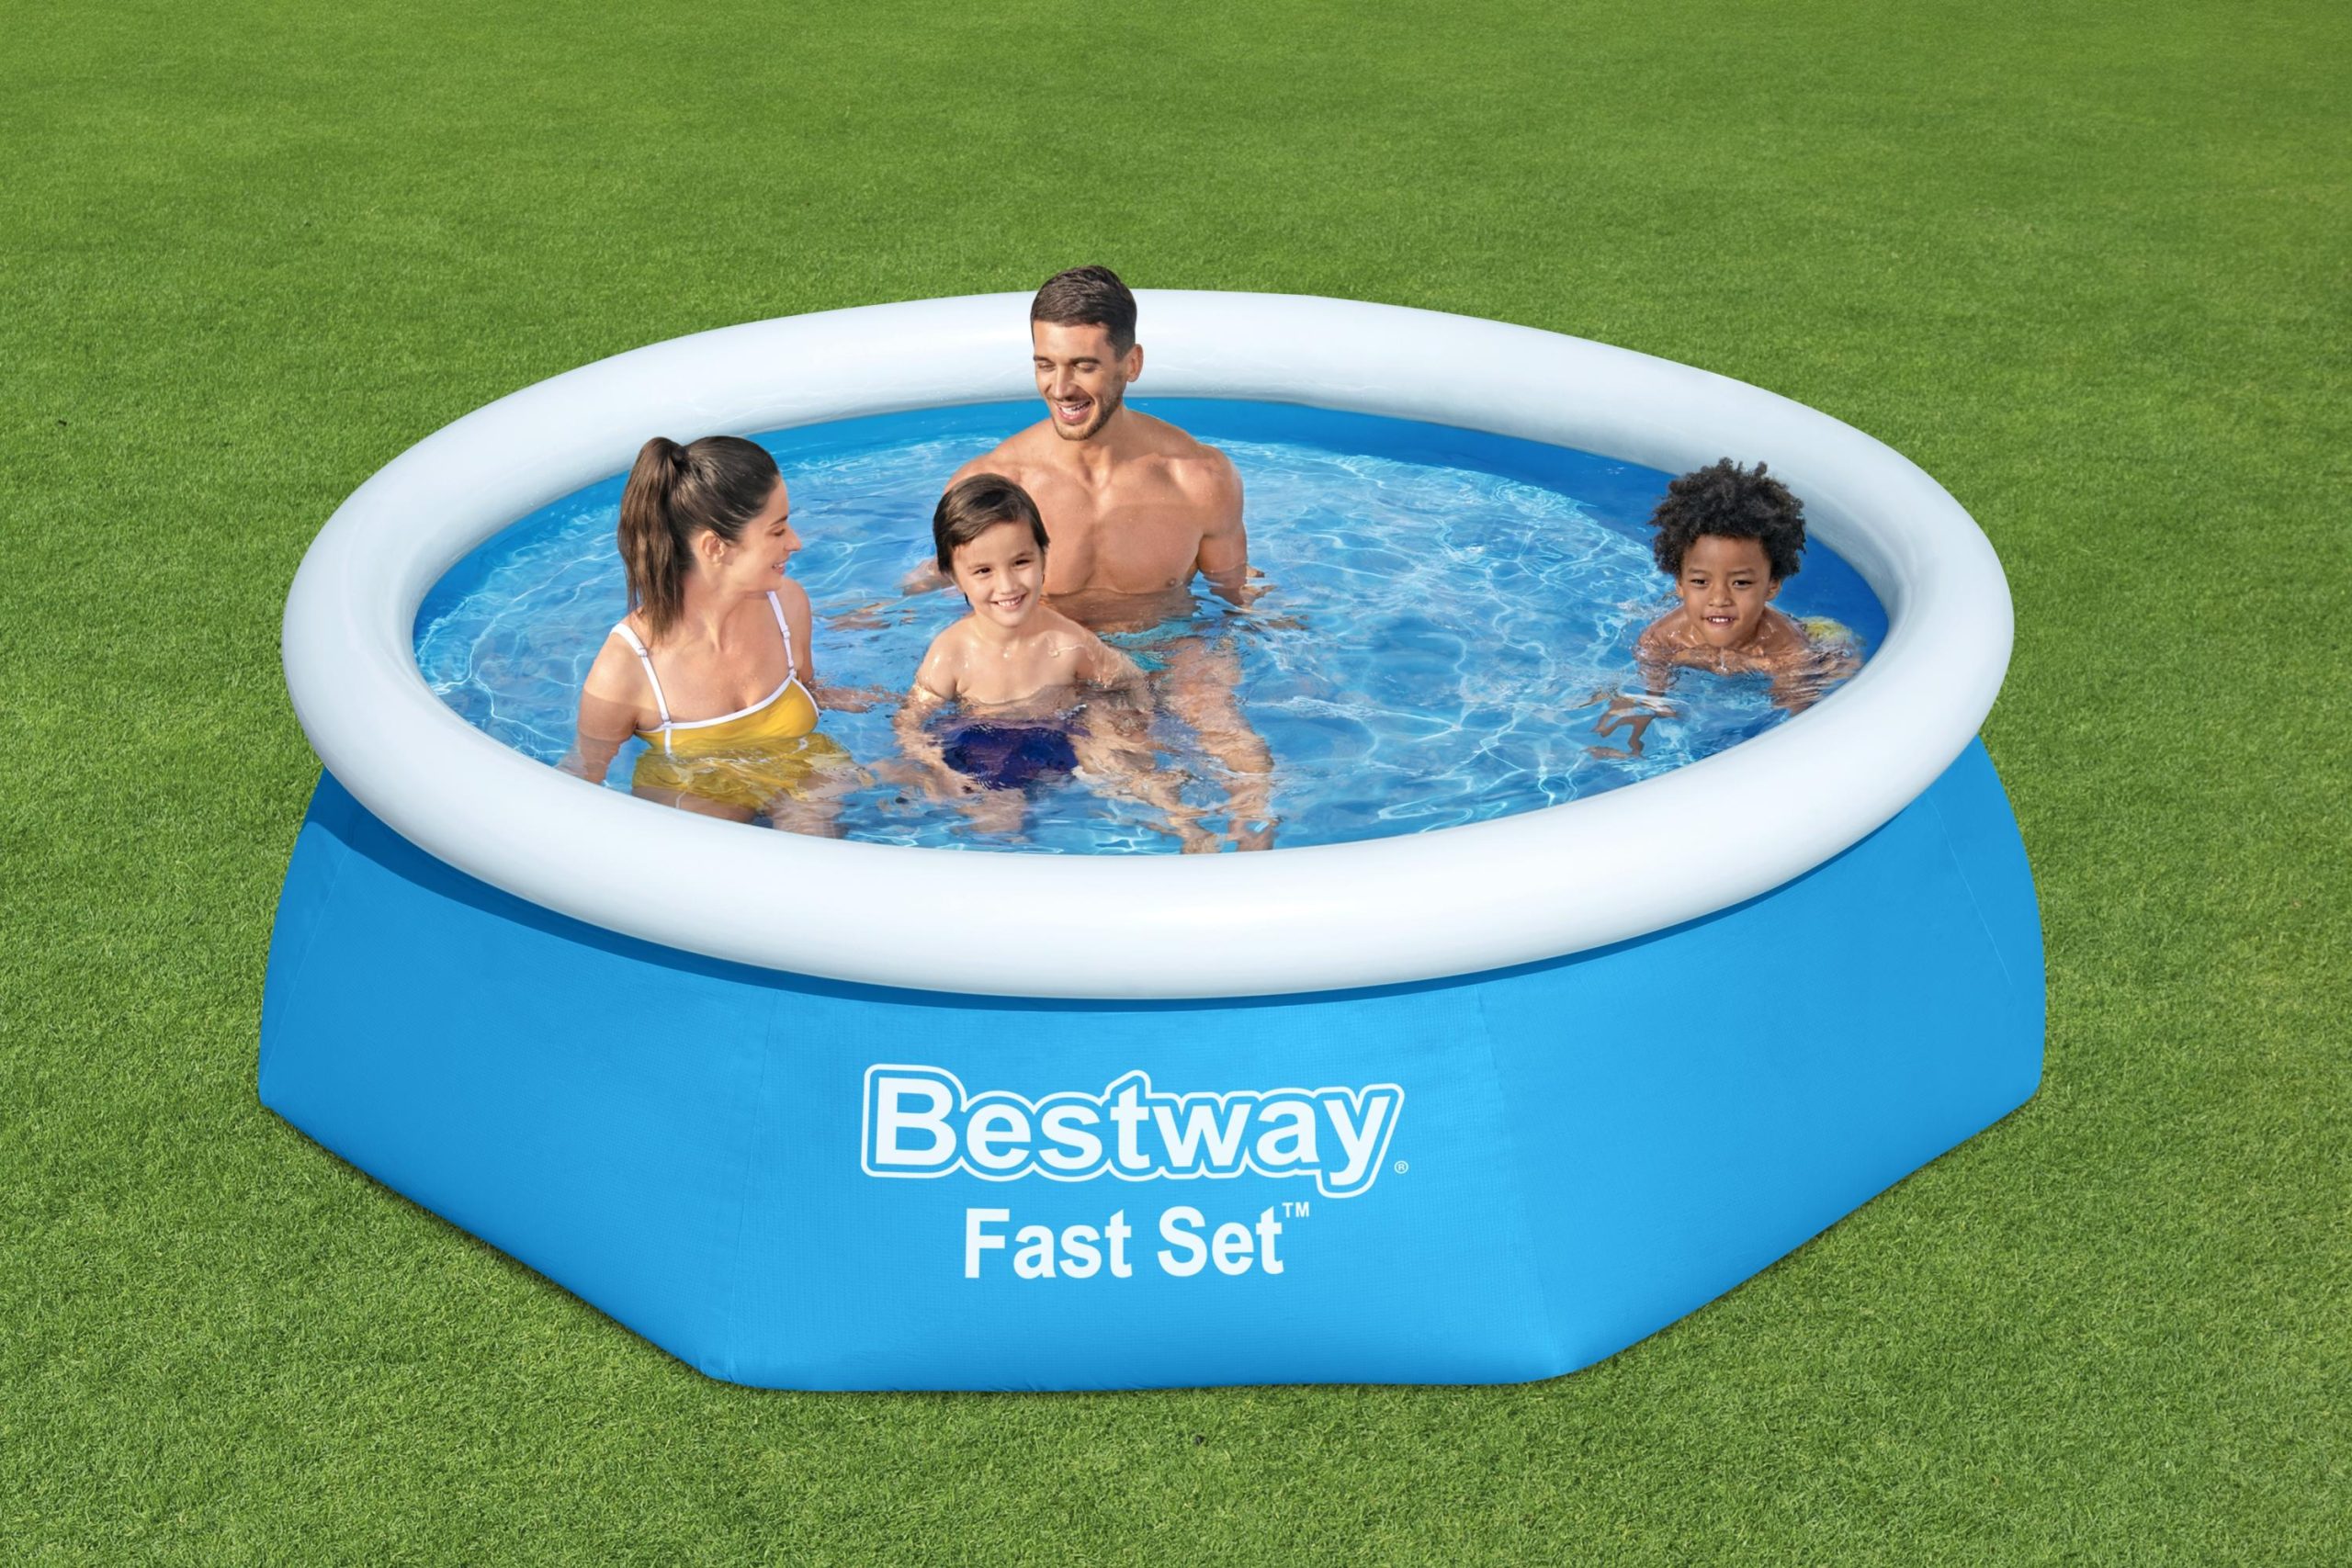 Bestway Bestway Round Kids Inflatable Paddling Pool with Filter Pump Fast Set 12 ft 